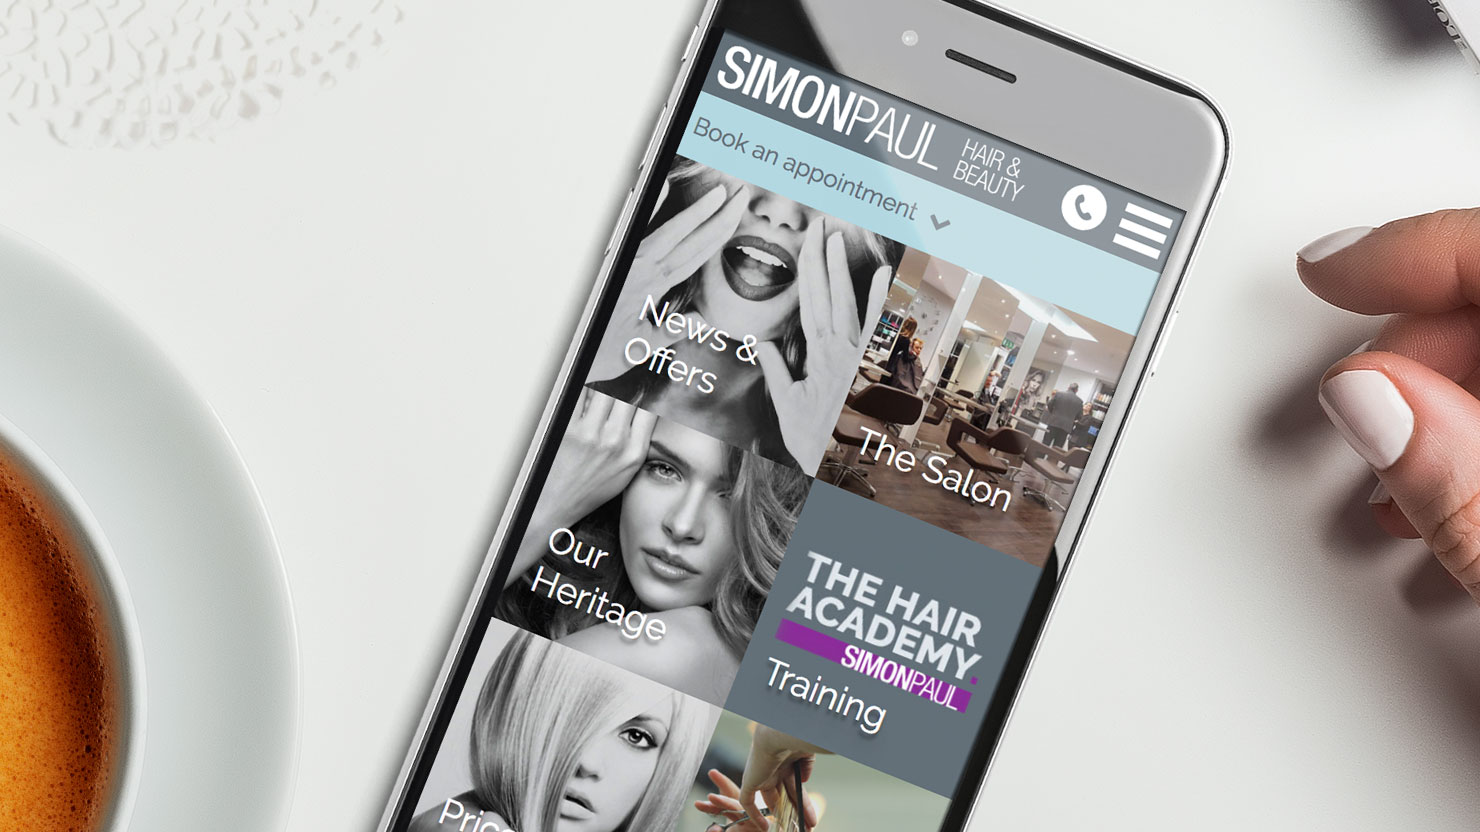 simon paul hair solihull web design on mobile device